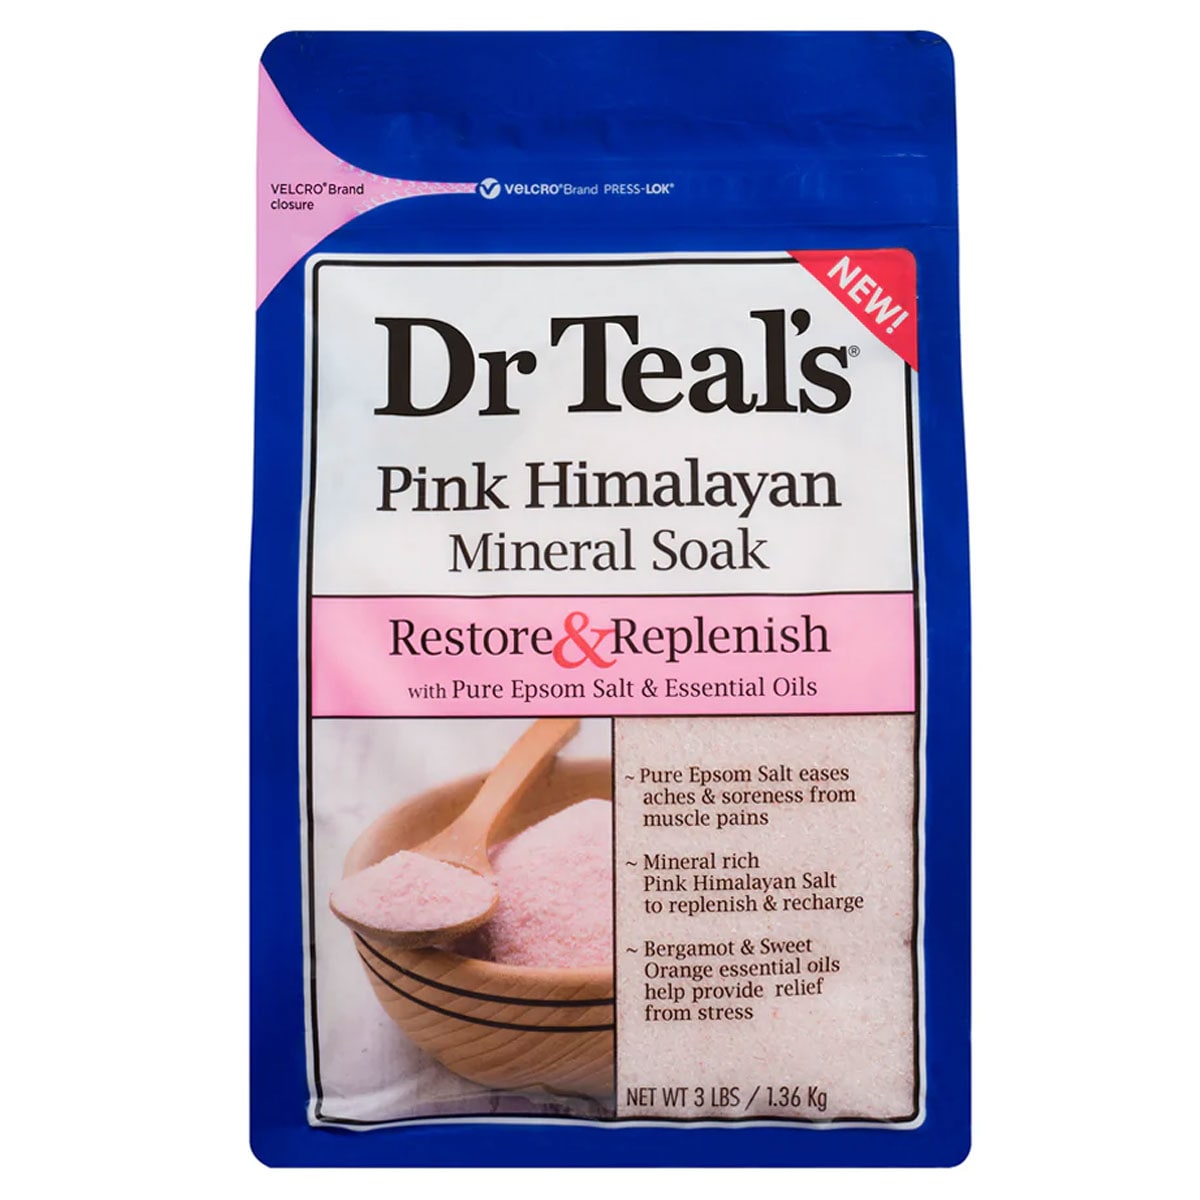 Dr Teals Pink Himalayan Mineral Soak 1.36kg